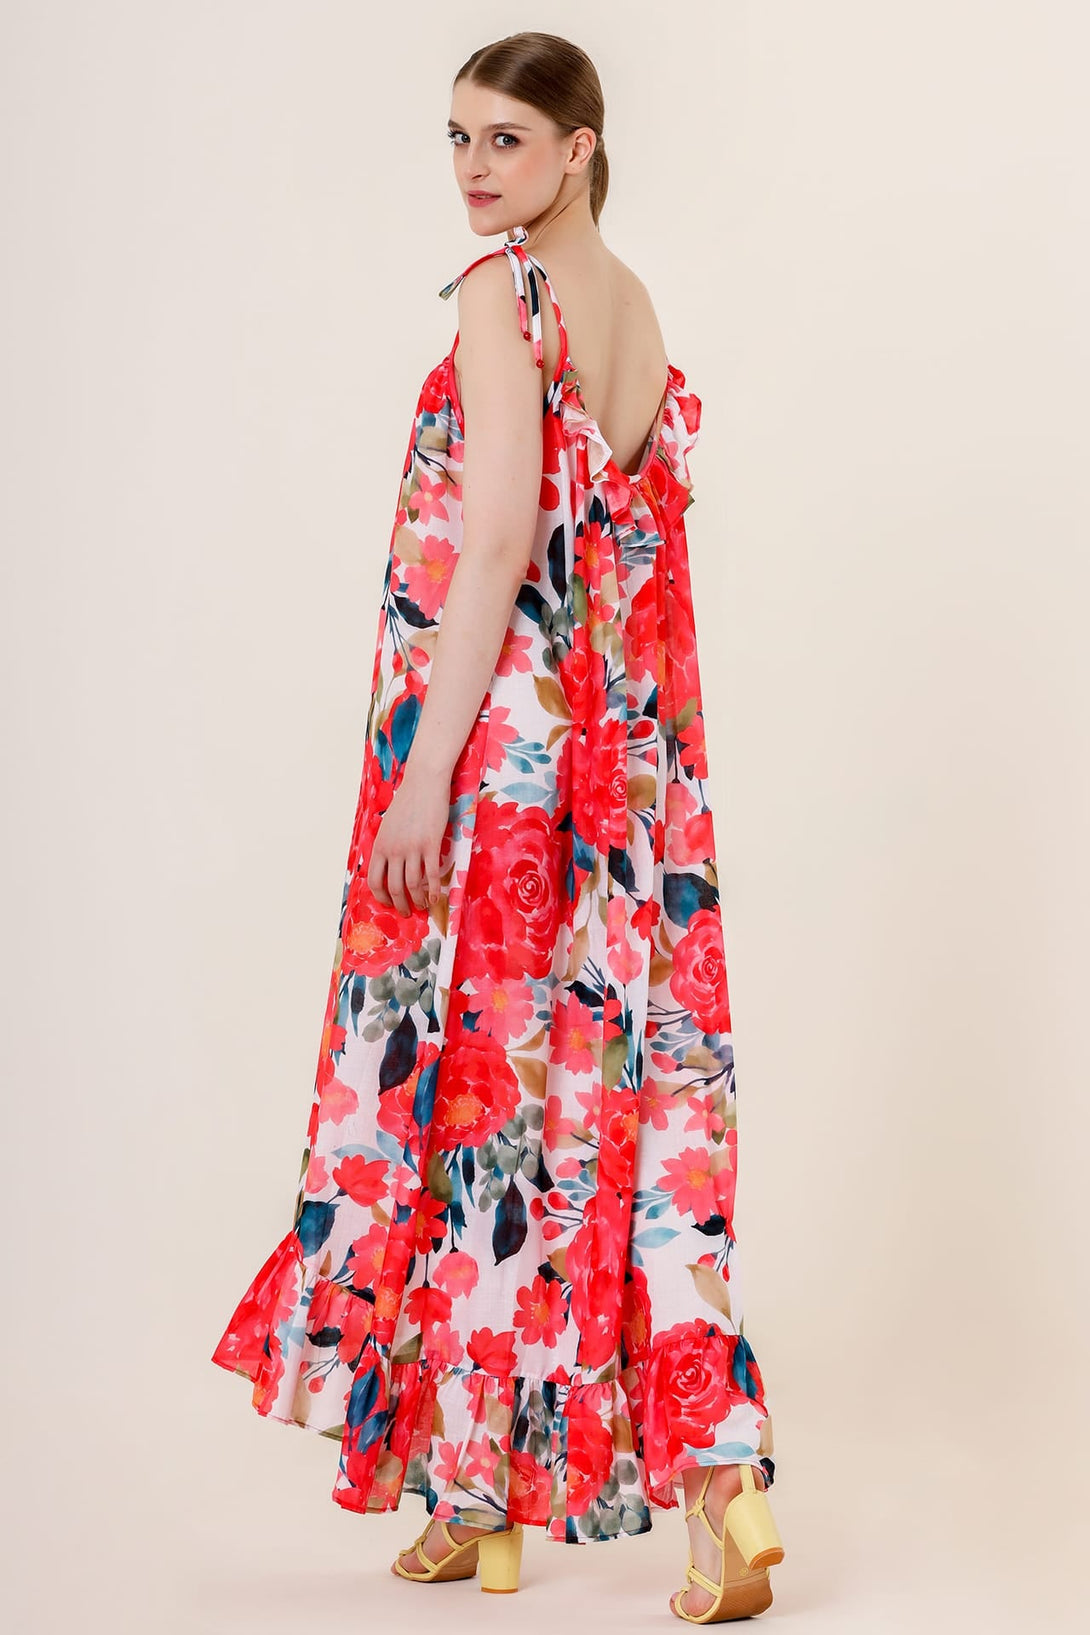 "hot pink long dress" "floor length dress" "floral print dress maxi" "floral maxi dress"